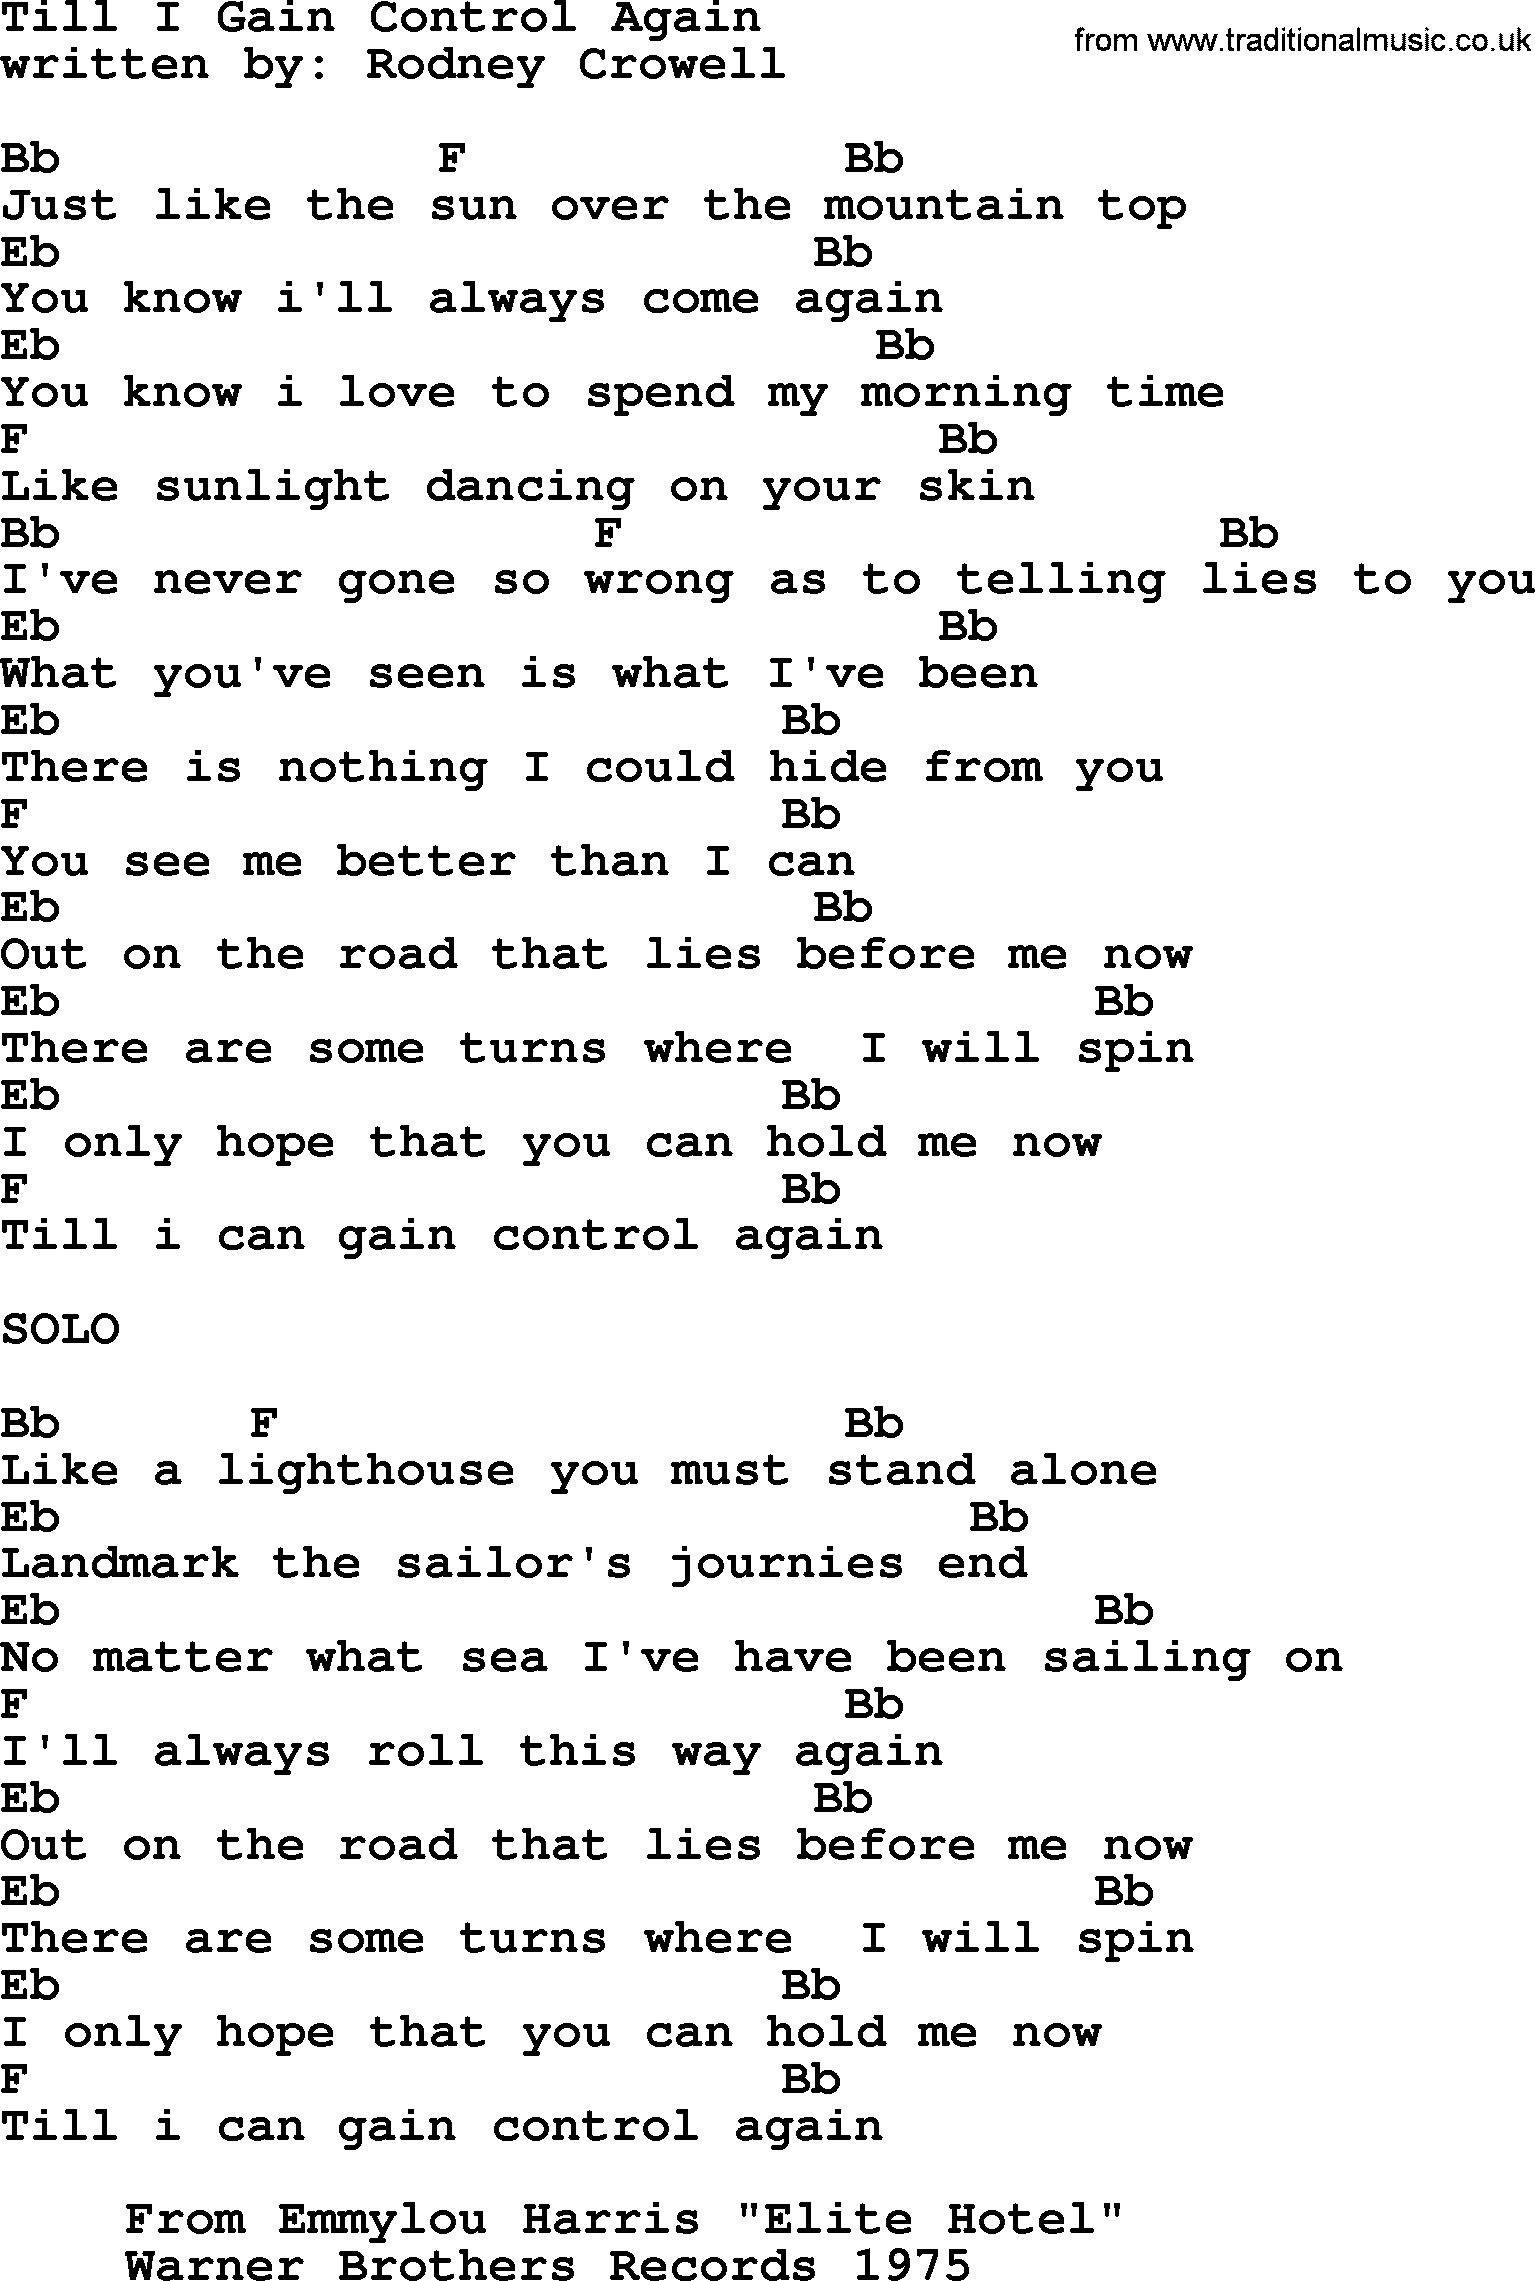 Emmylou Harris song: Till I Gain Control Again lyrics and chords